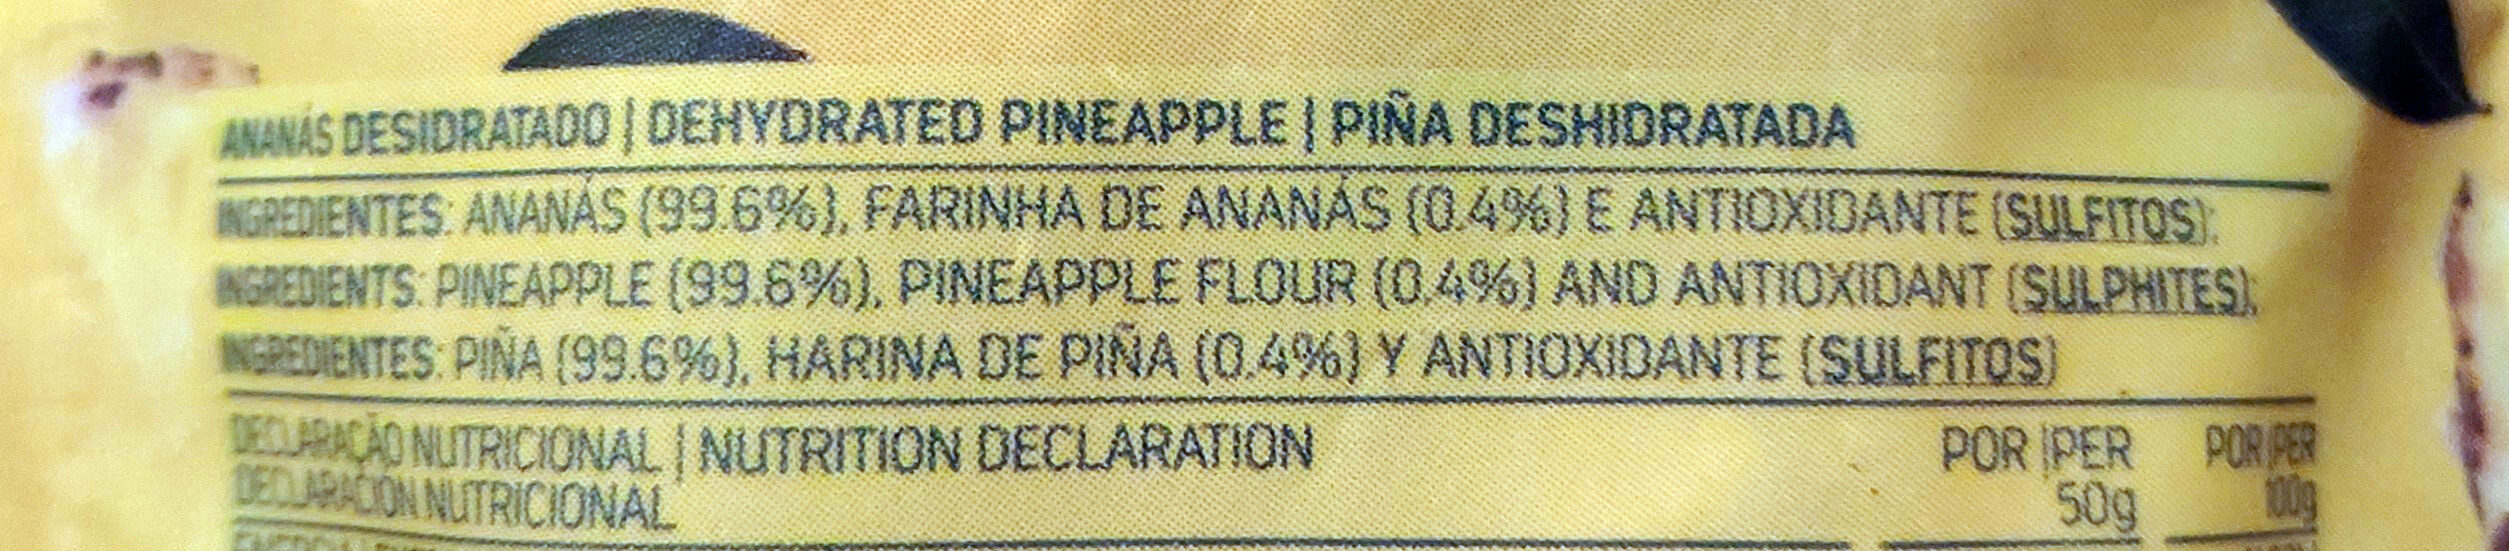 Piña deshidratada - Ingredients